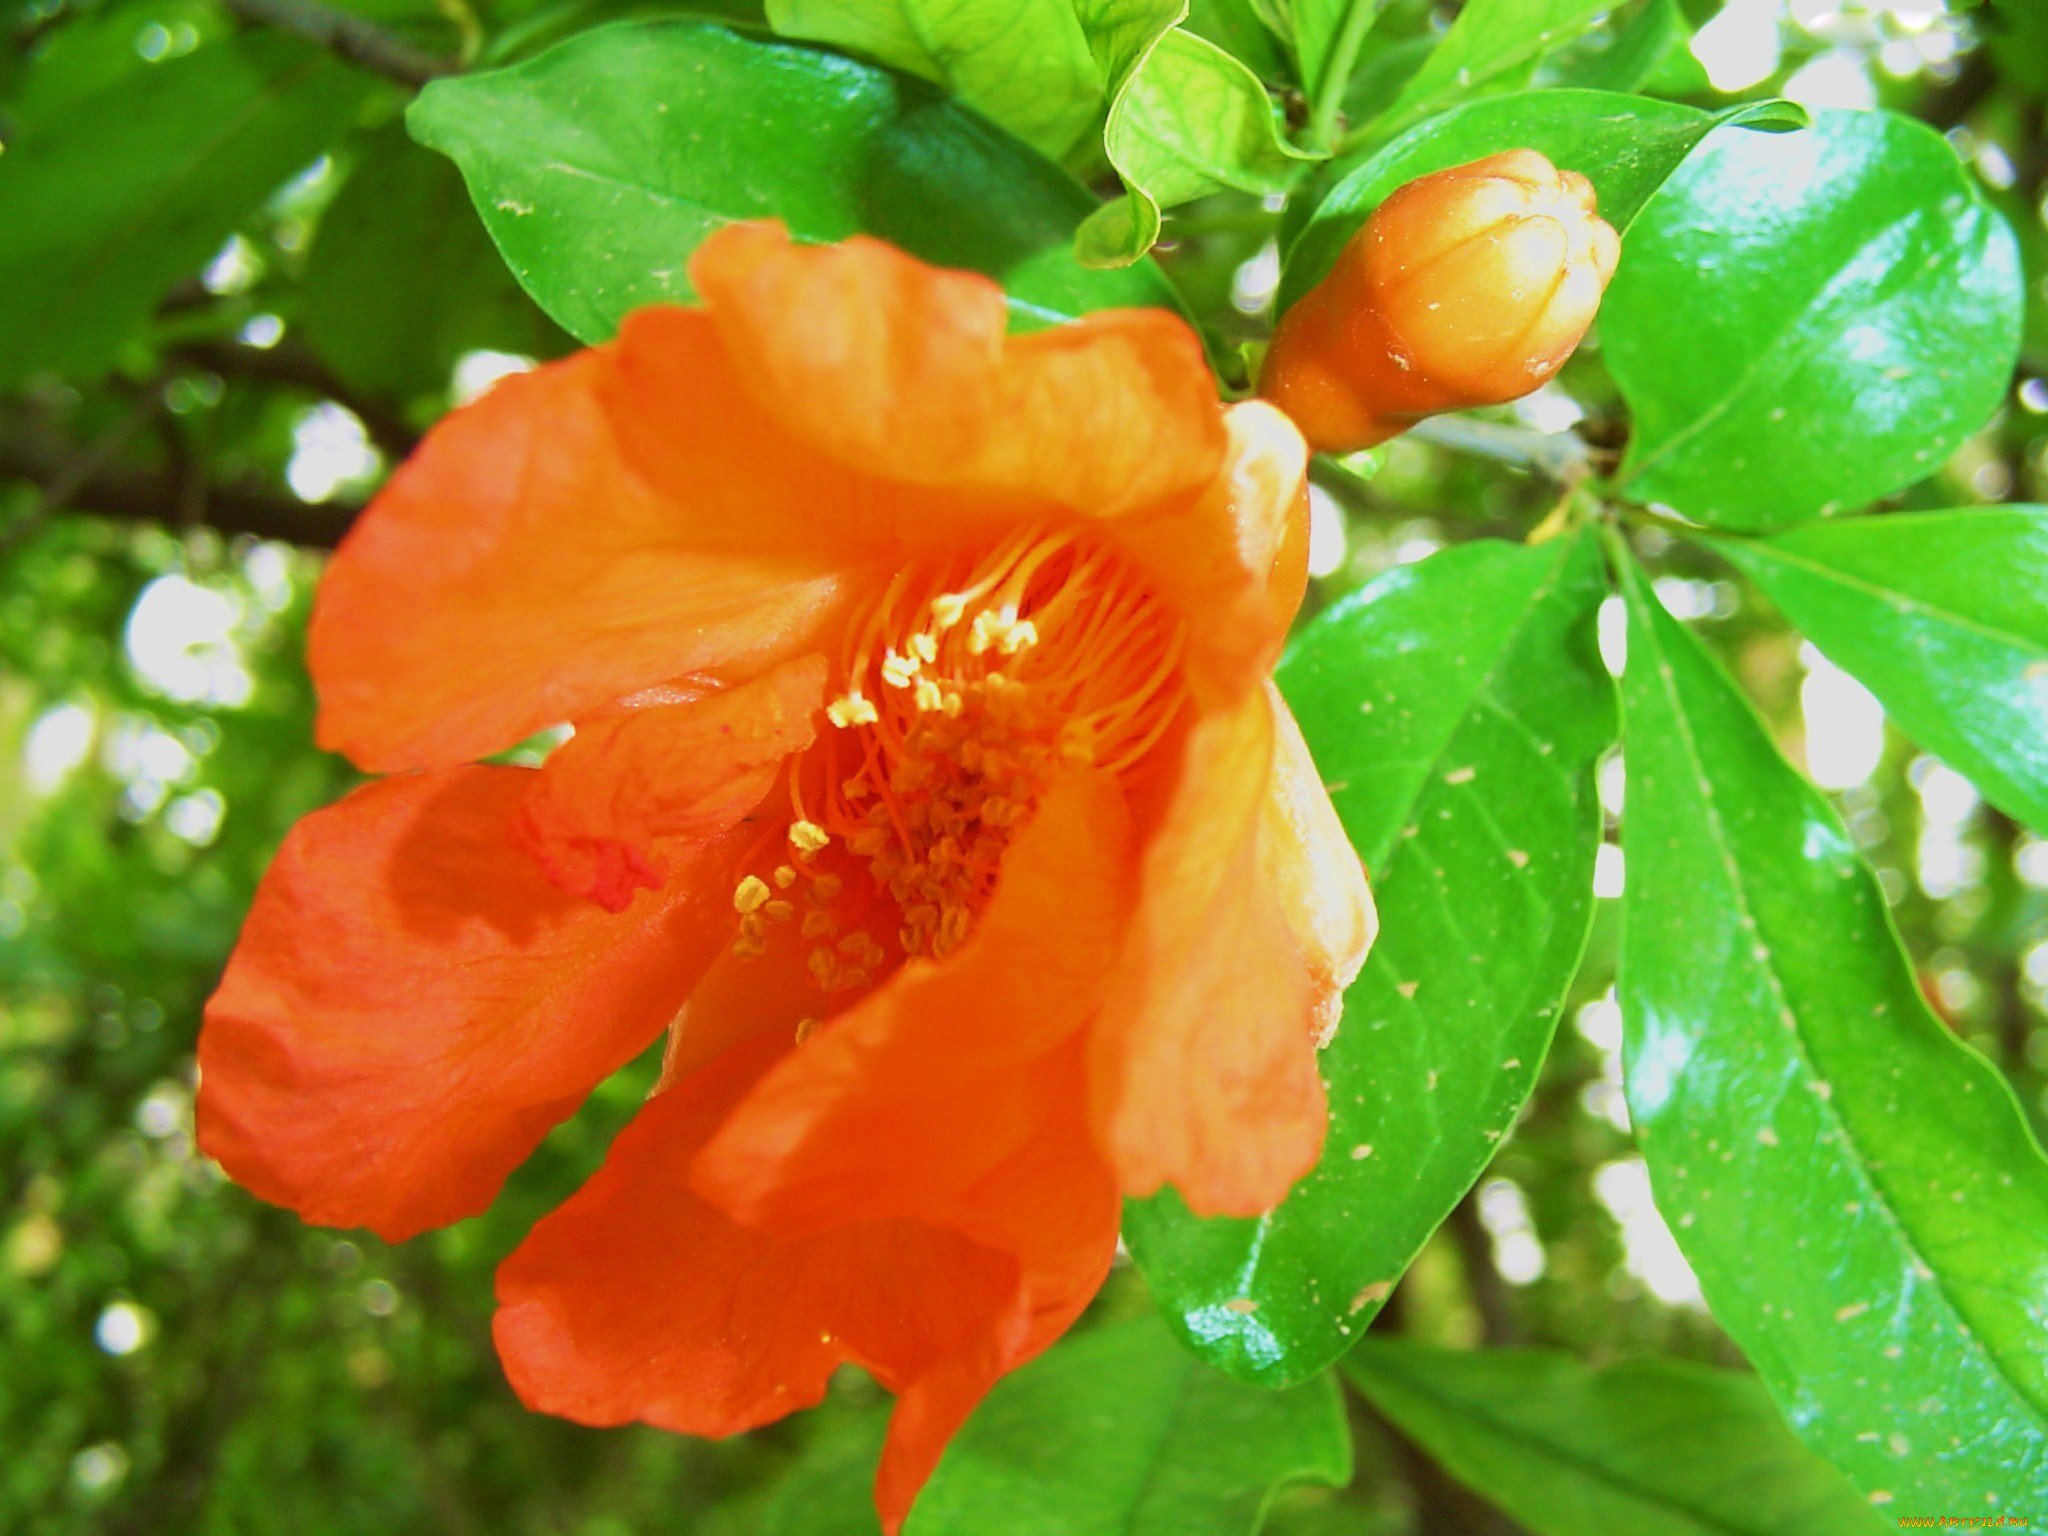 Как цветет мандарин. Померанец дерево цветёт. Цветение мандарина. Лерево мандарин цветёт. Мандарин дерево цветет.